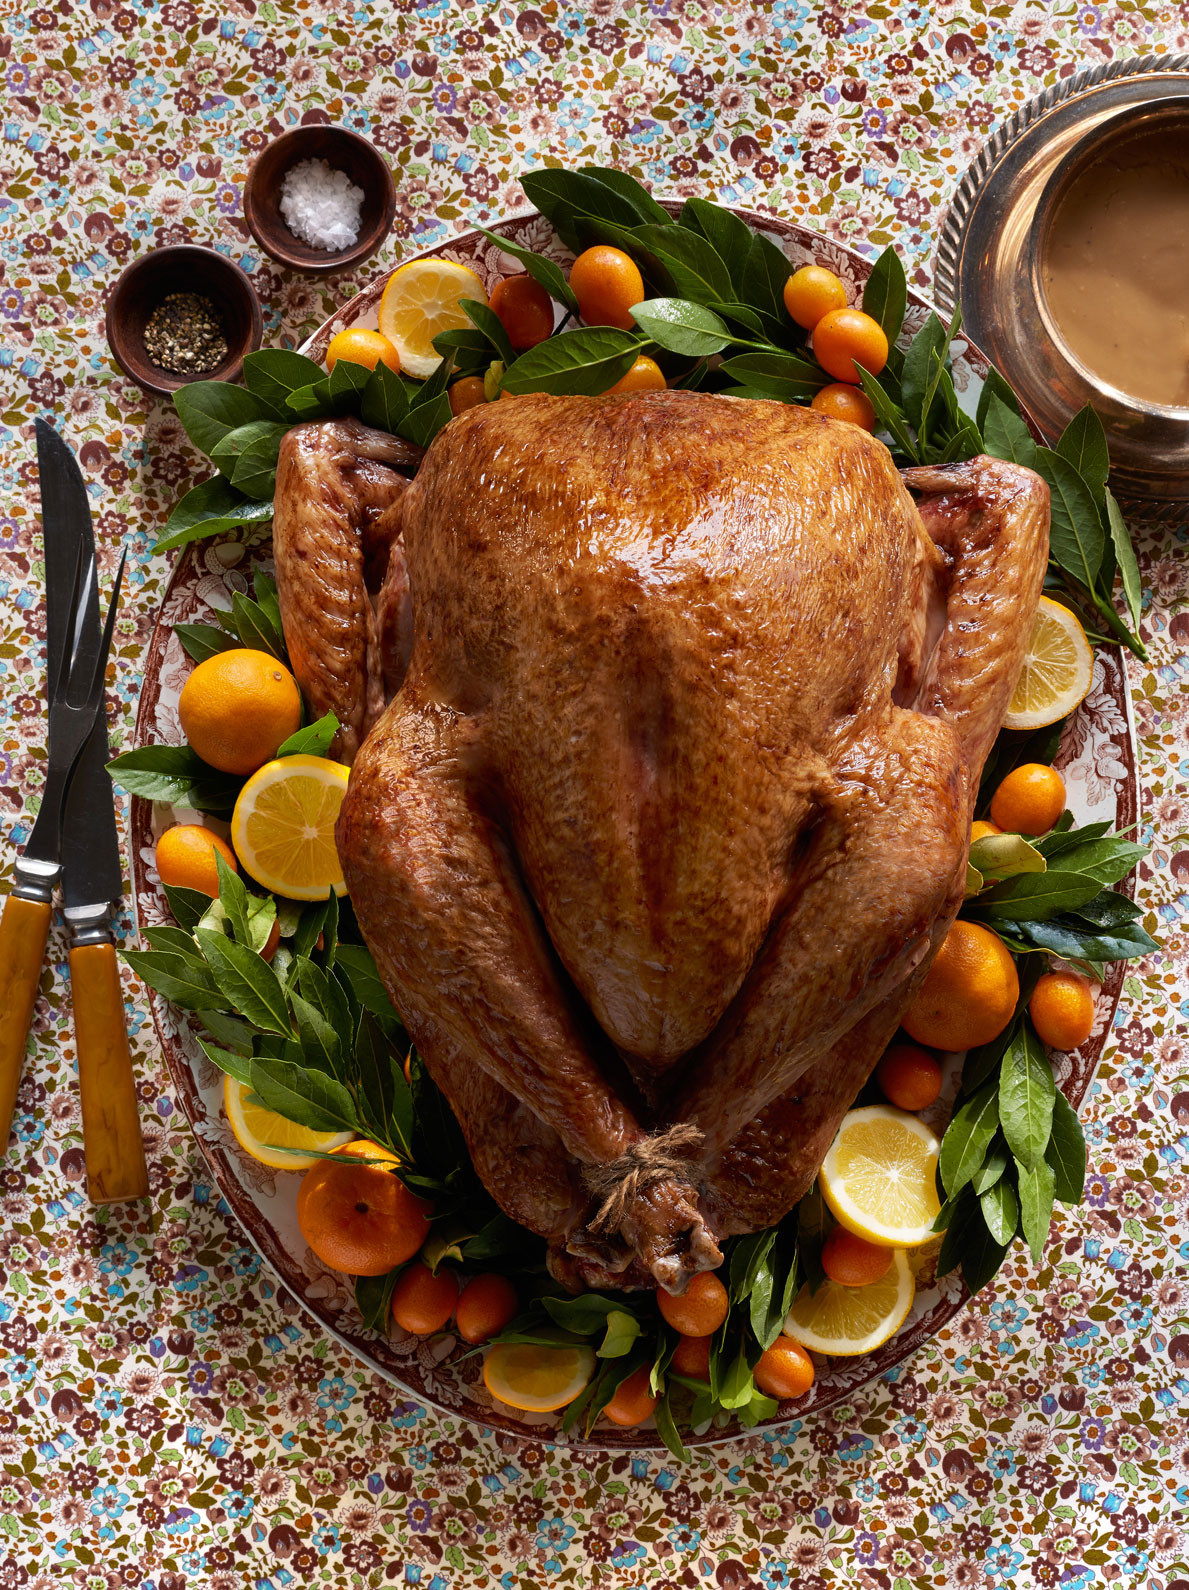 Thanksgiving Video Full Of Turkey
 25 Best Thanksgiving Turkey Recipes How To Cook Turkey